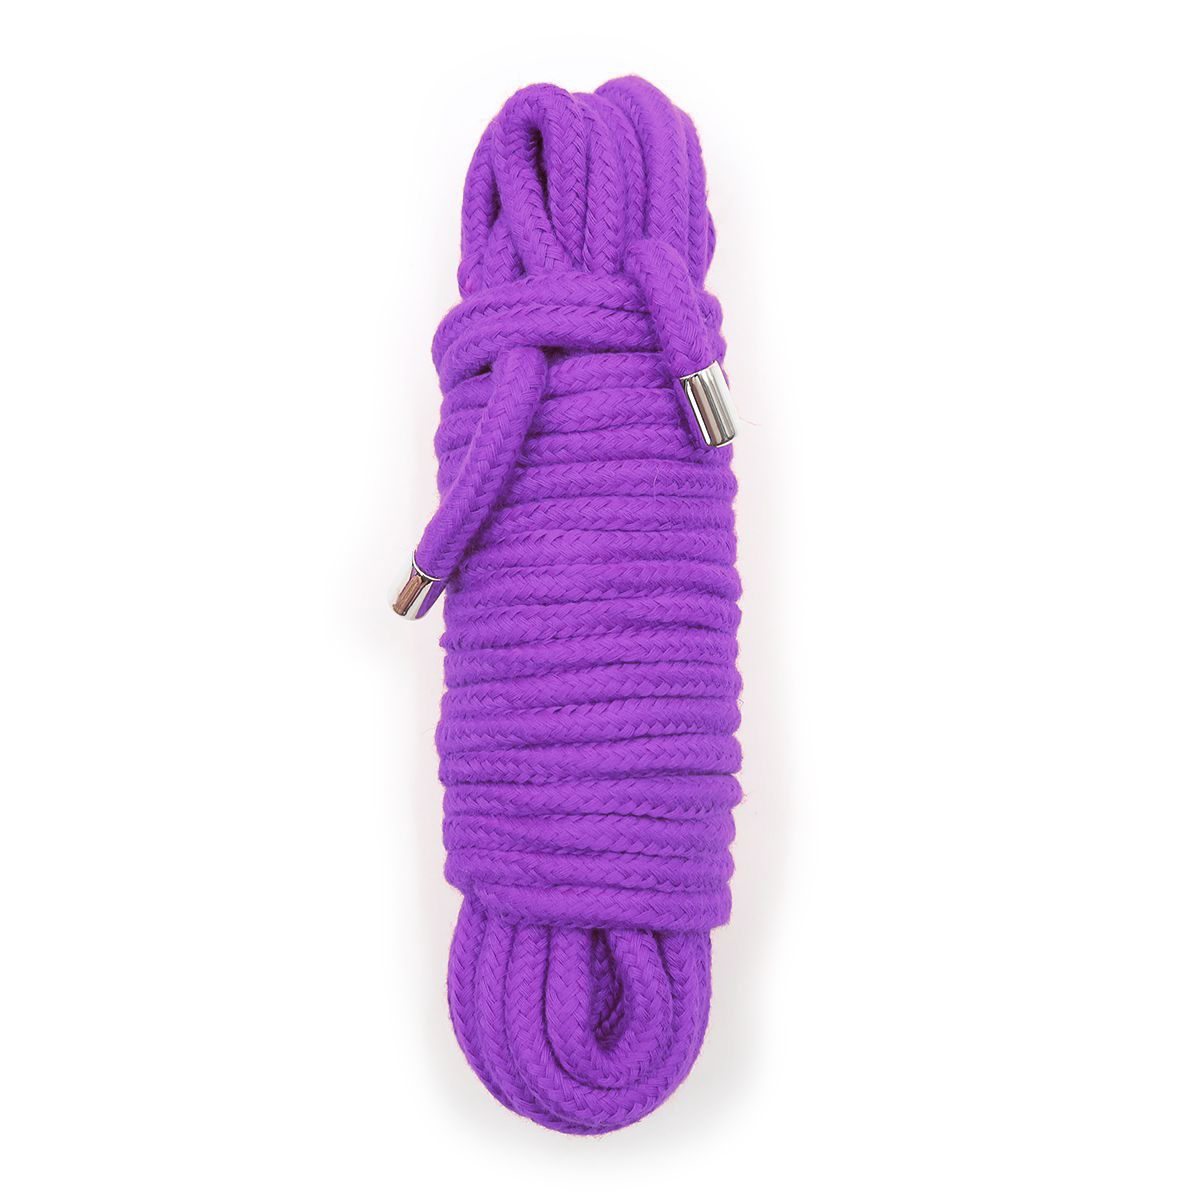 20-Meter-BDSM-Cotton-Rope-Purple-OPR-321057-1